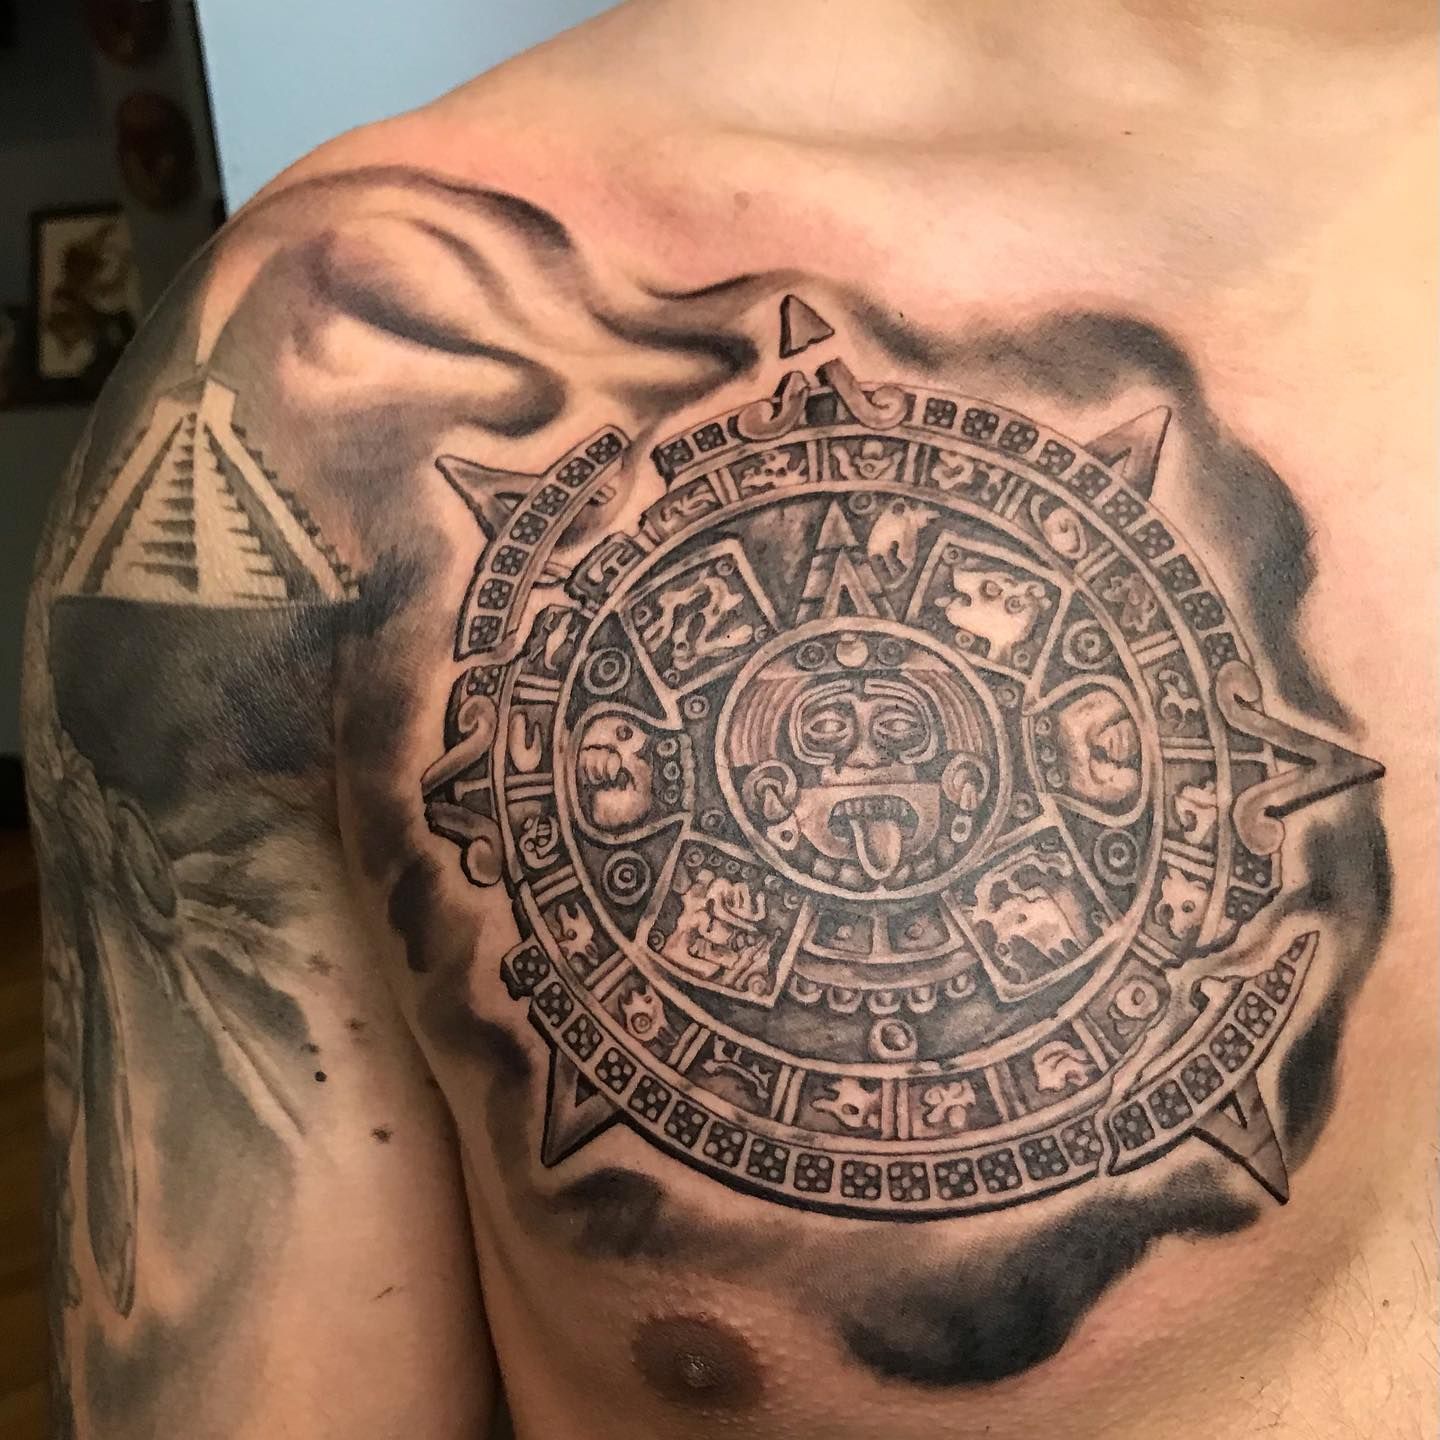 Aztec calendar | Aztec tattoos, Aztec tattoos sleeve, Aztec tattoo designs